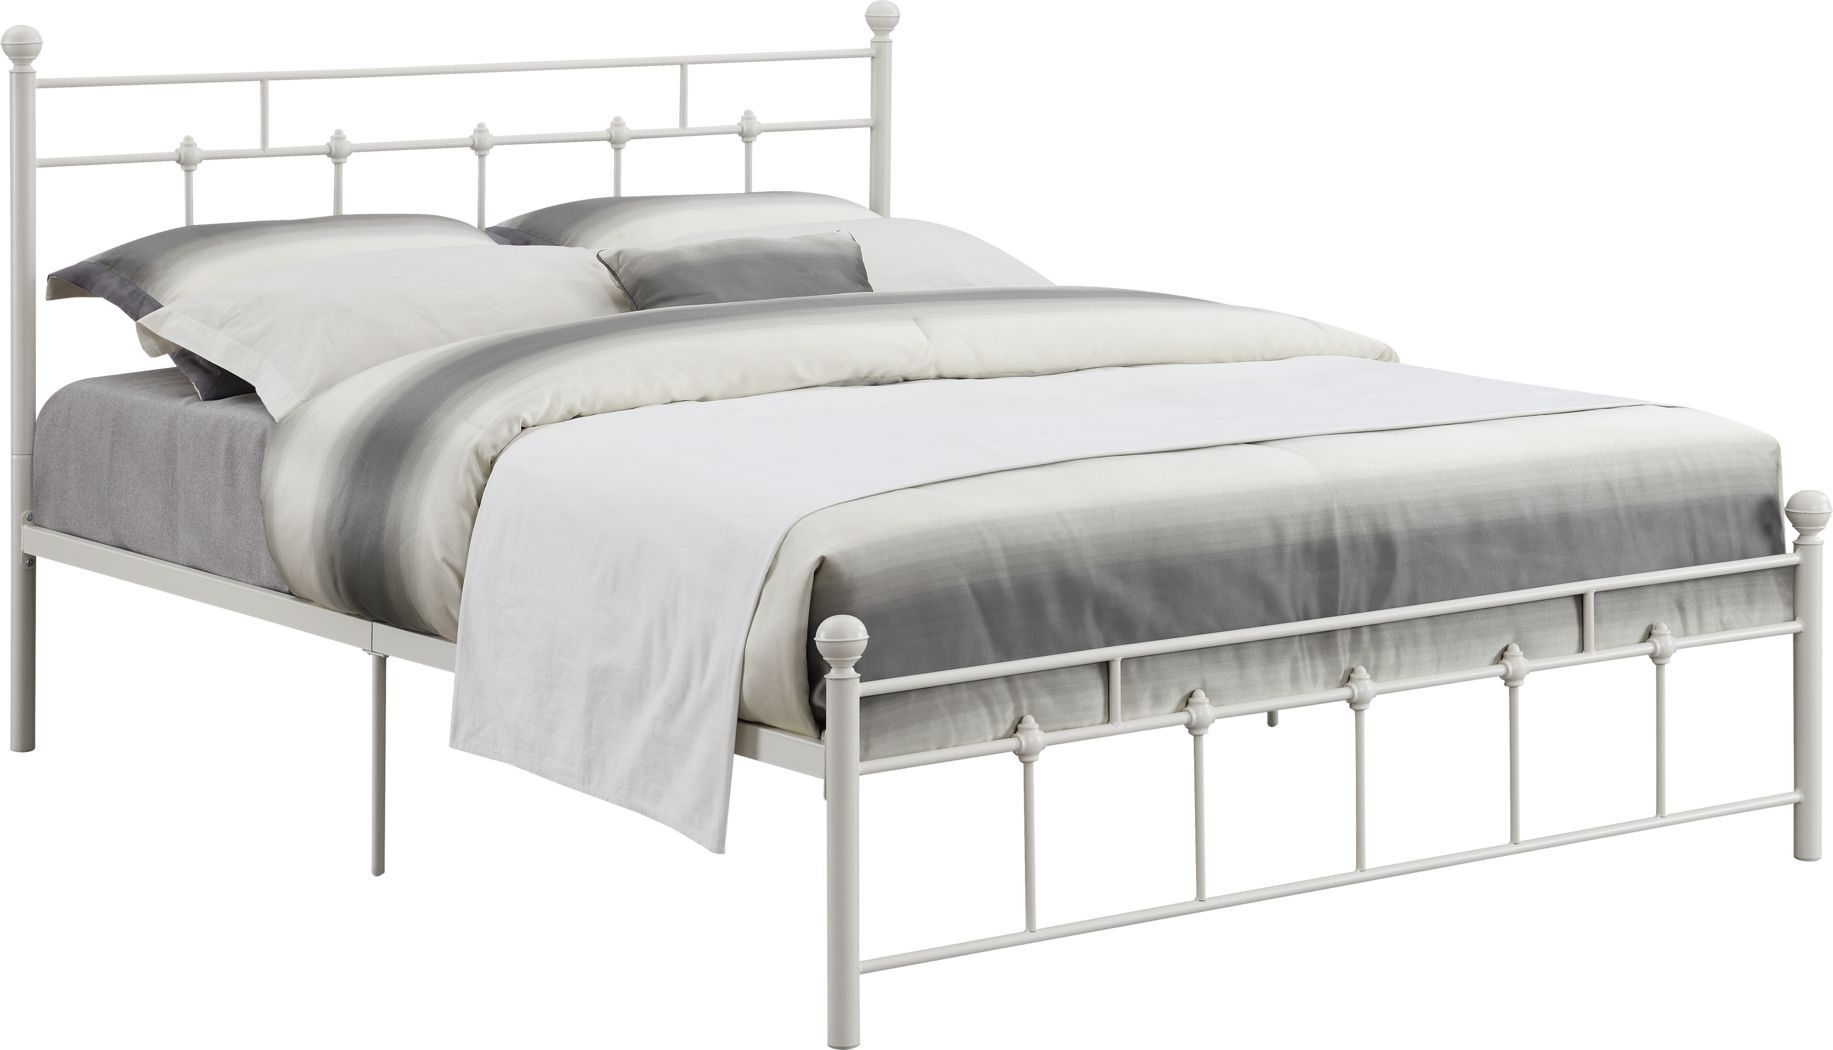 Metal King Size Beds Frames, Lull Metal Bed Frame Review